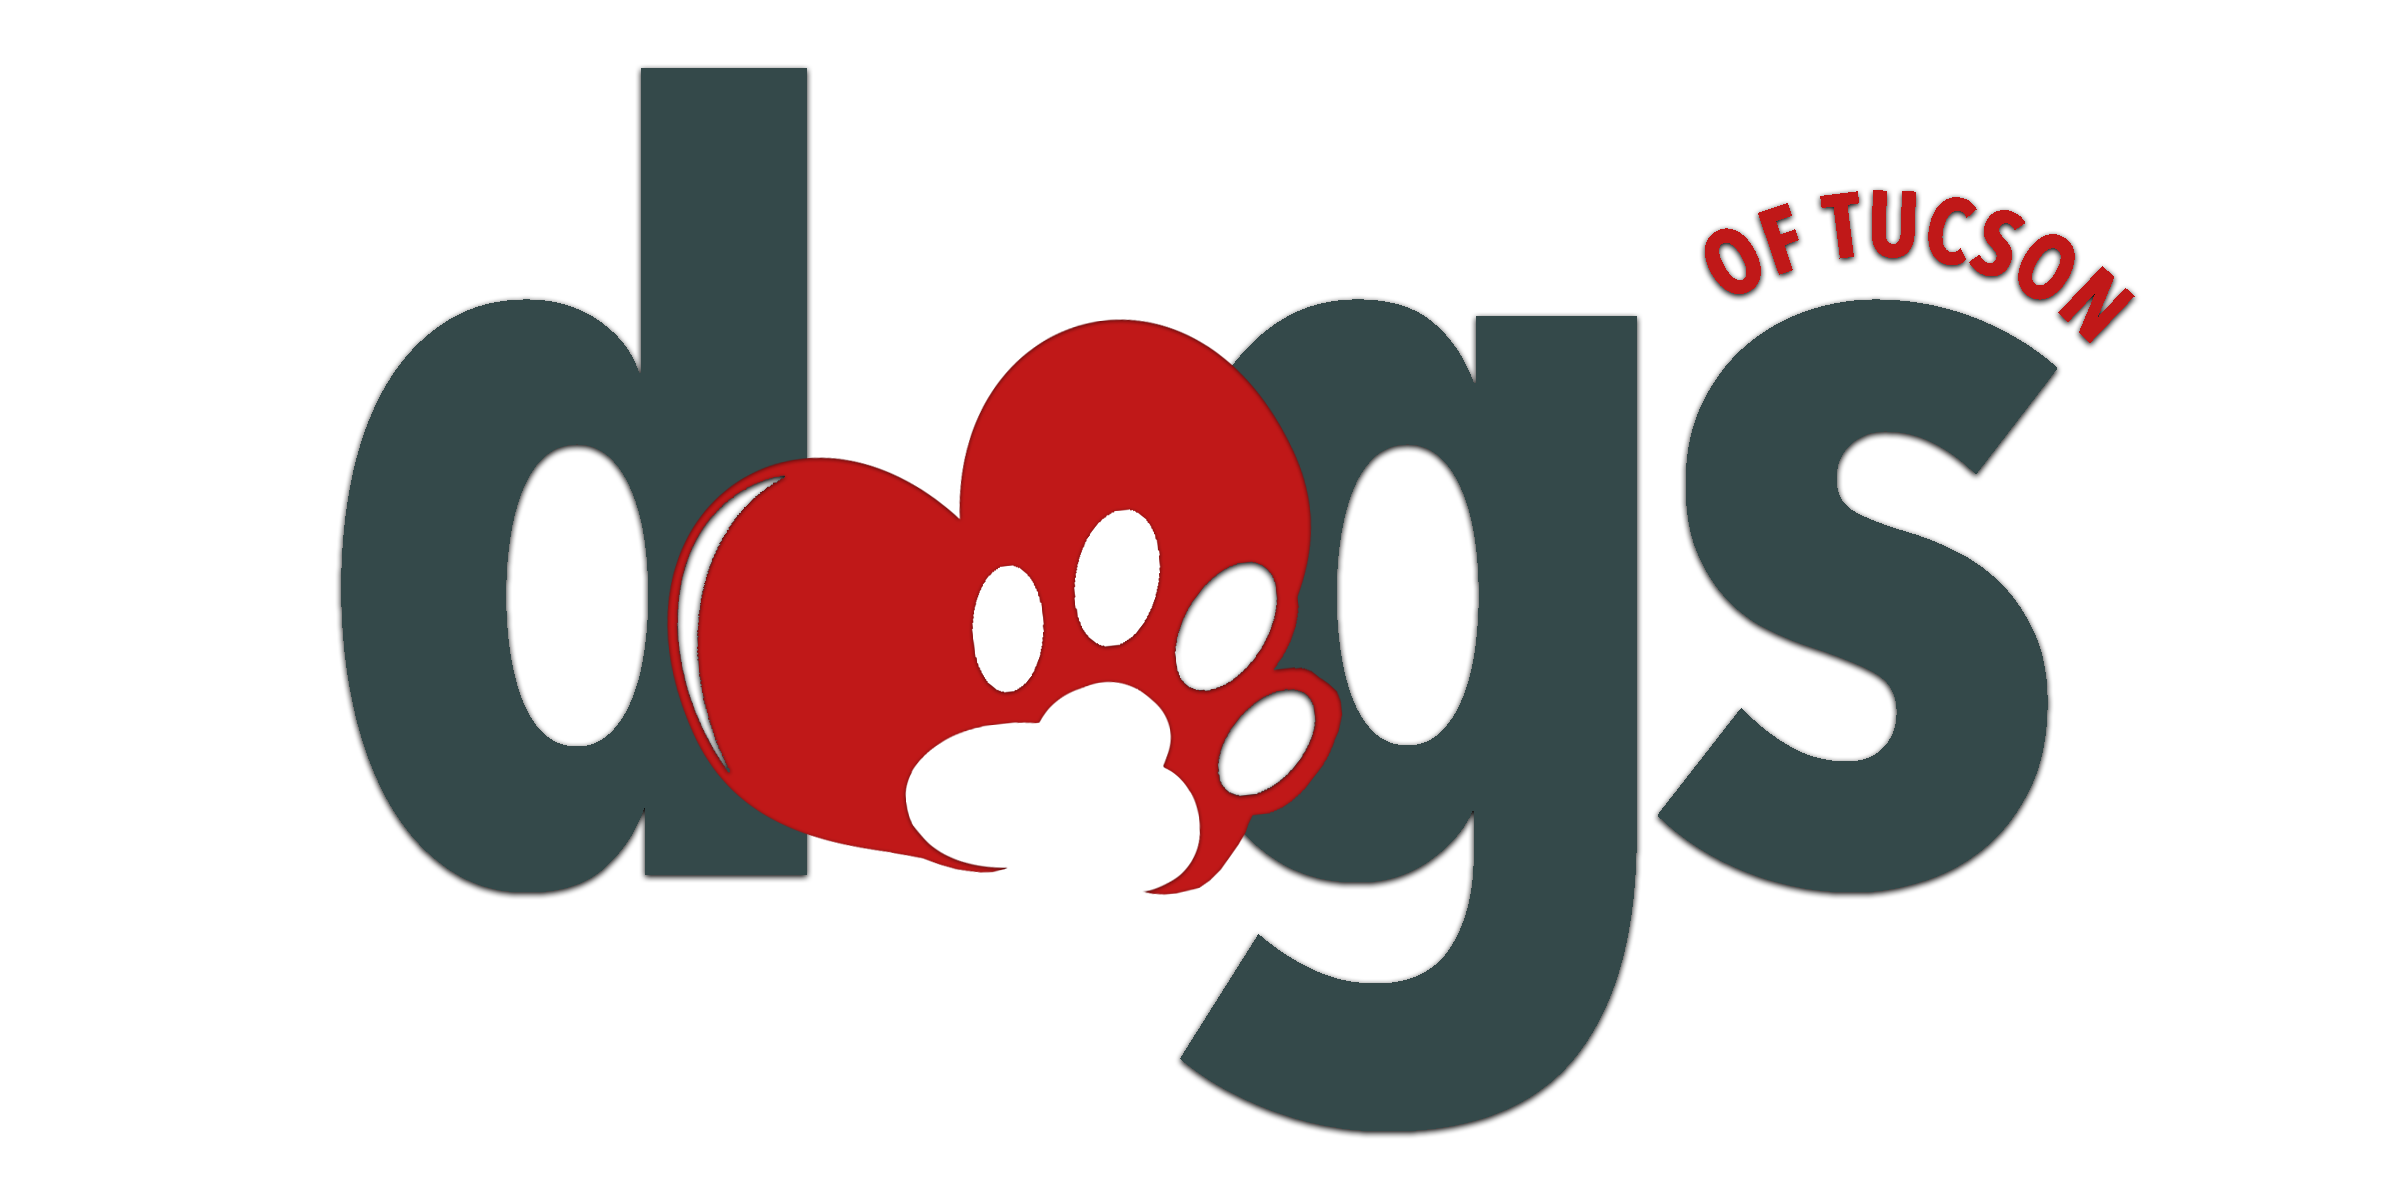 Dogs of Tucson logo